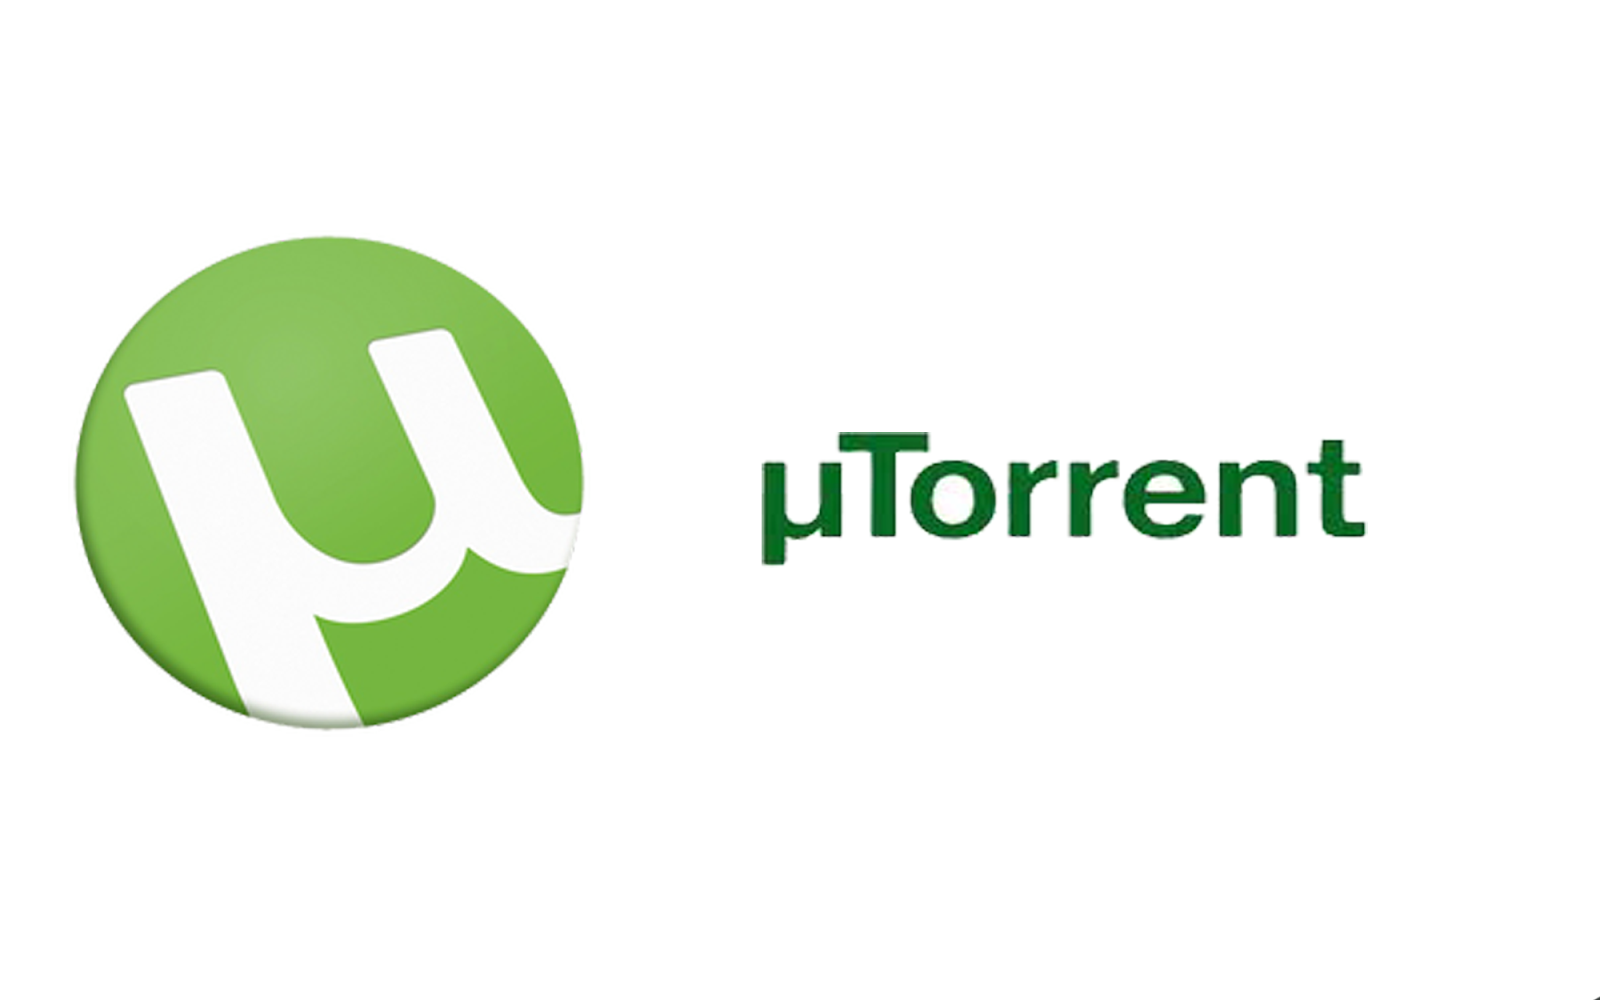 Www utorrent com intl. Utorrent картинки. Utorrent логотип. Ярлык utorrent. Значок utorrent ICO.